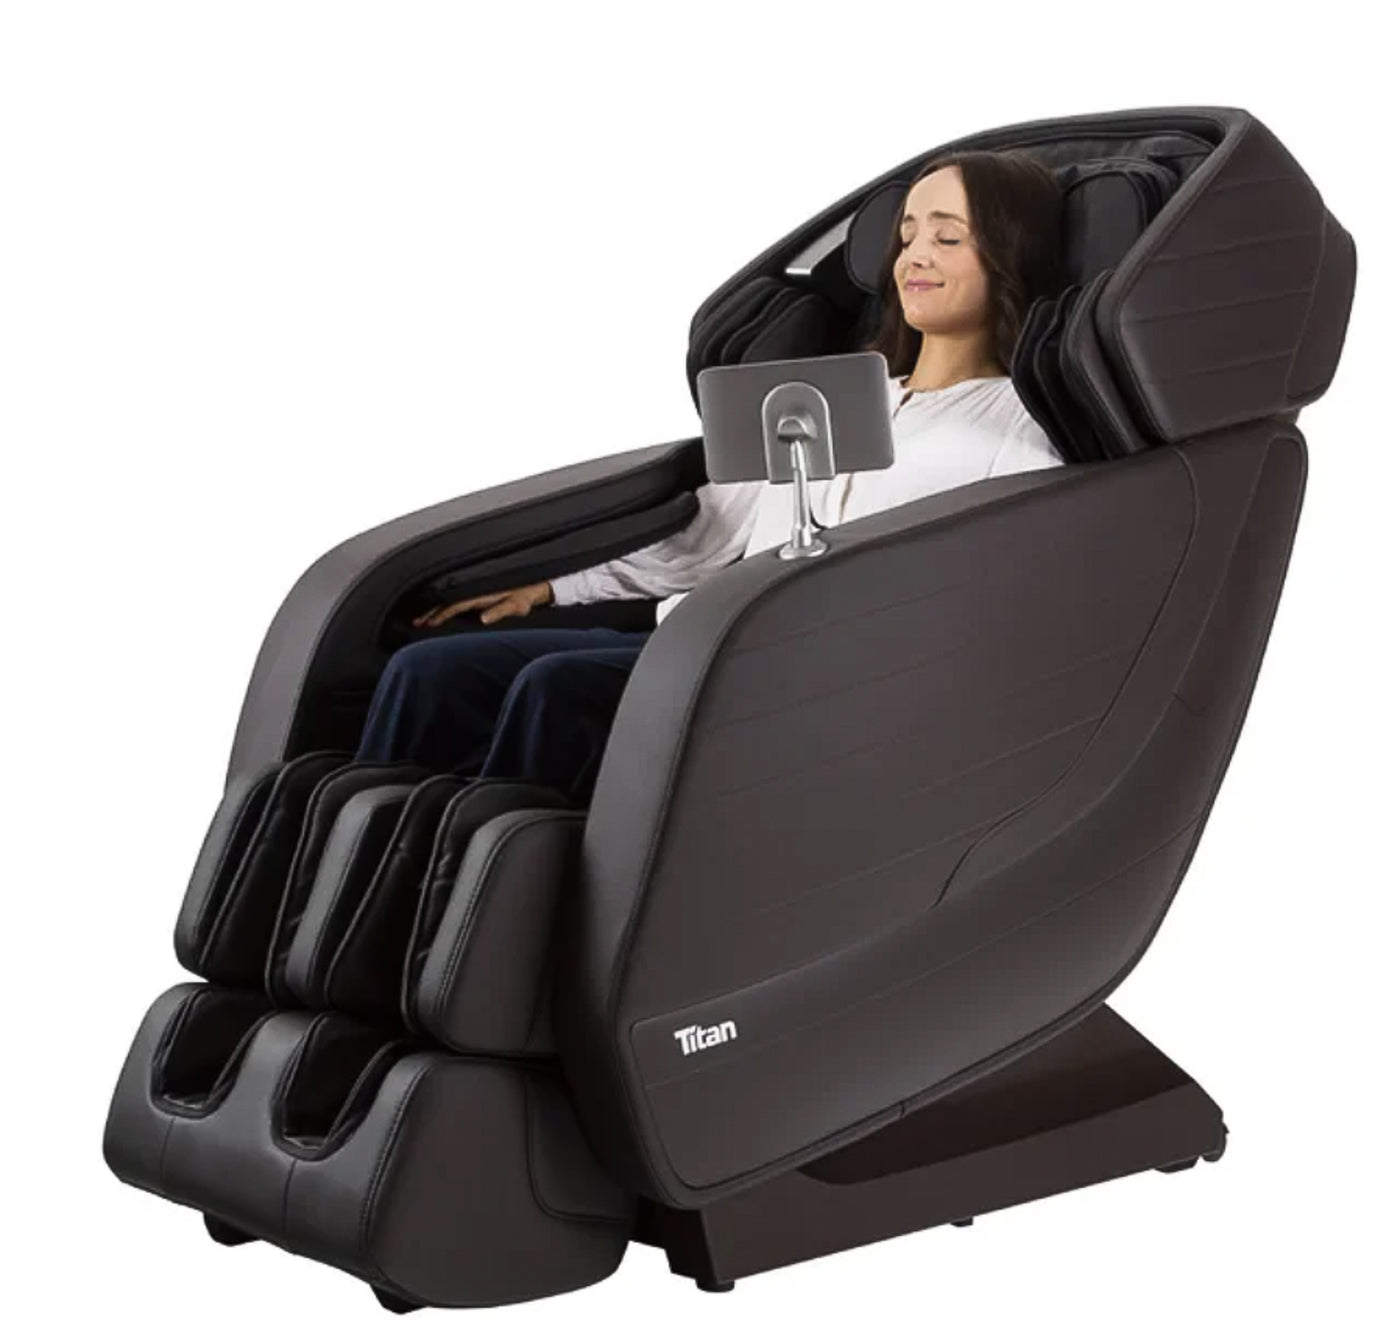 Titan Jupiter LE Premium 4D Massage Chair - 5 Year Free Extended Warranty